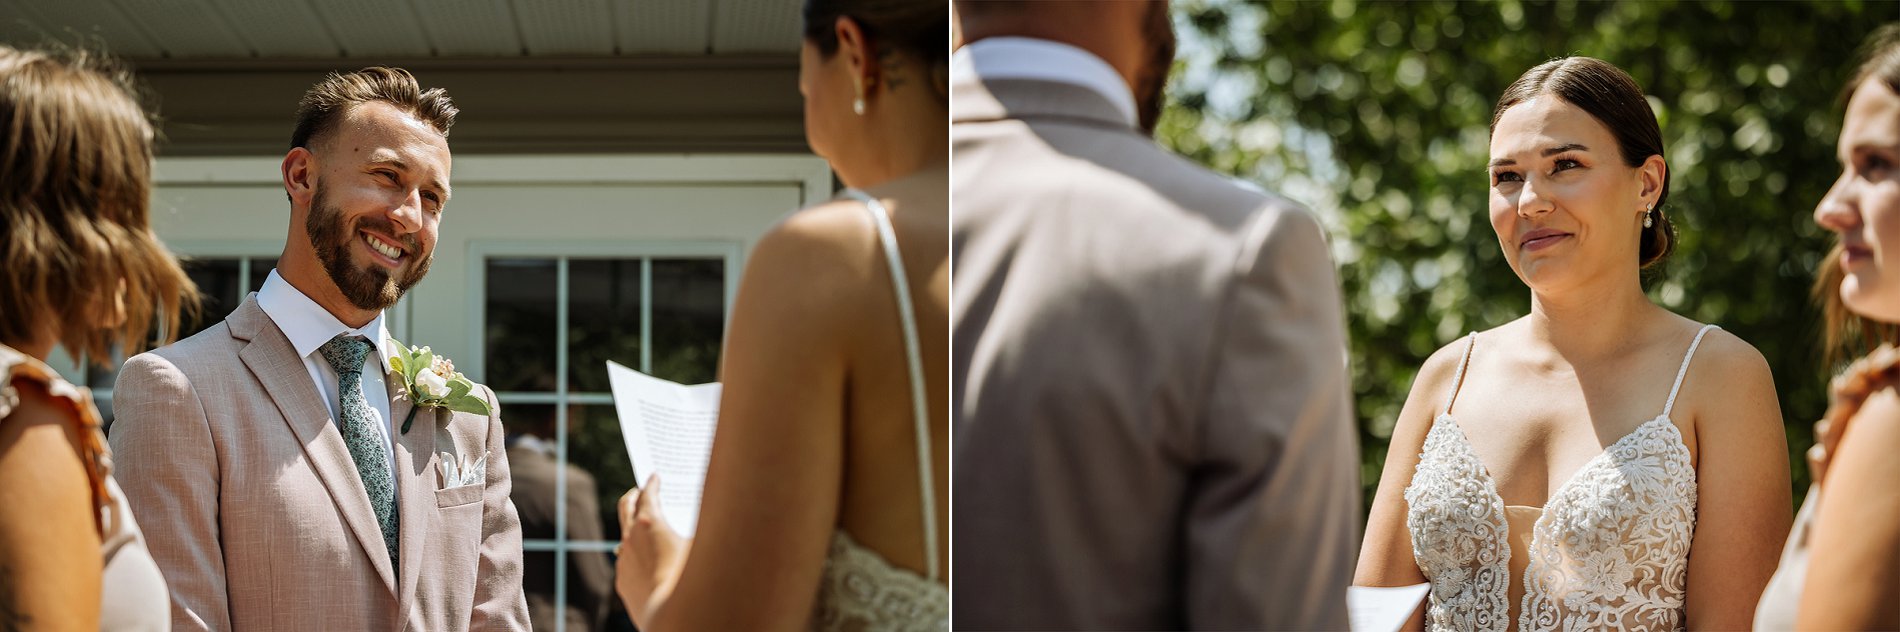 Bride and groom say their vows at their Saskatoon outdoor wedding.